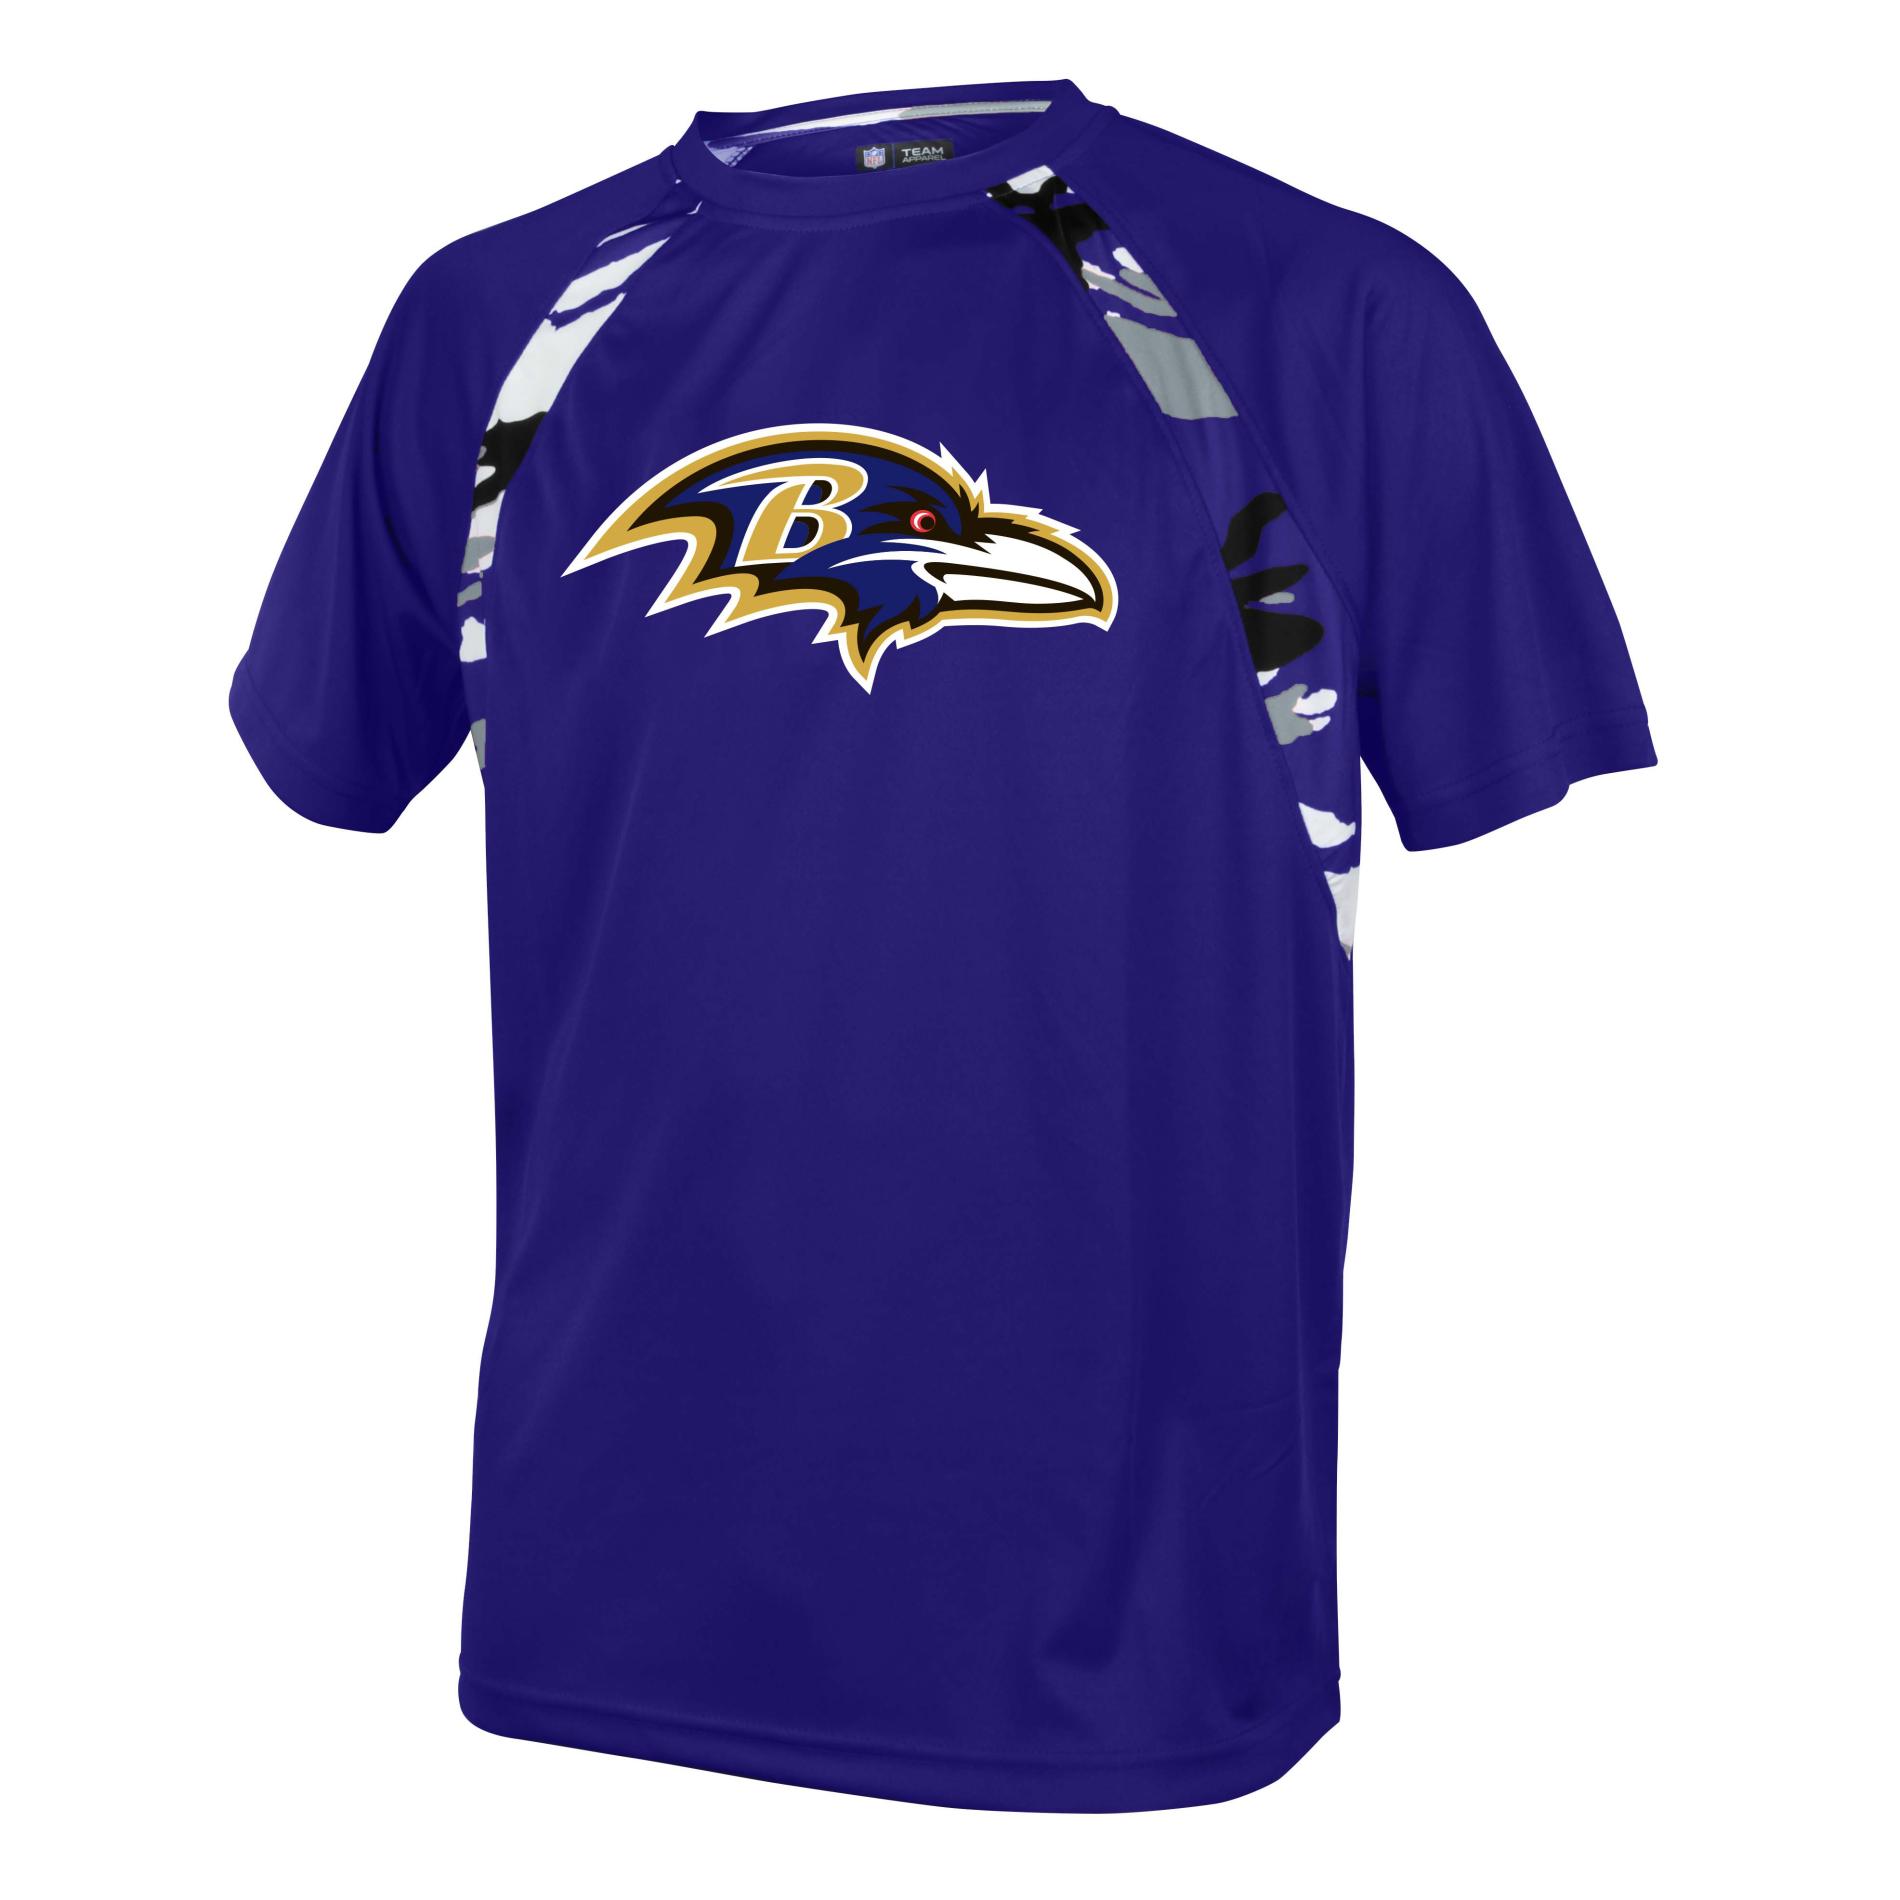 NFL Men's Graphic T-Shirt - Baltimore Ravens